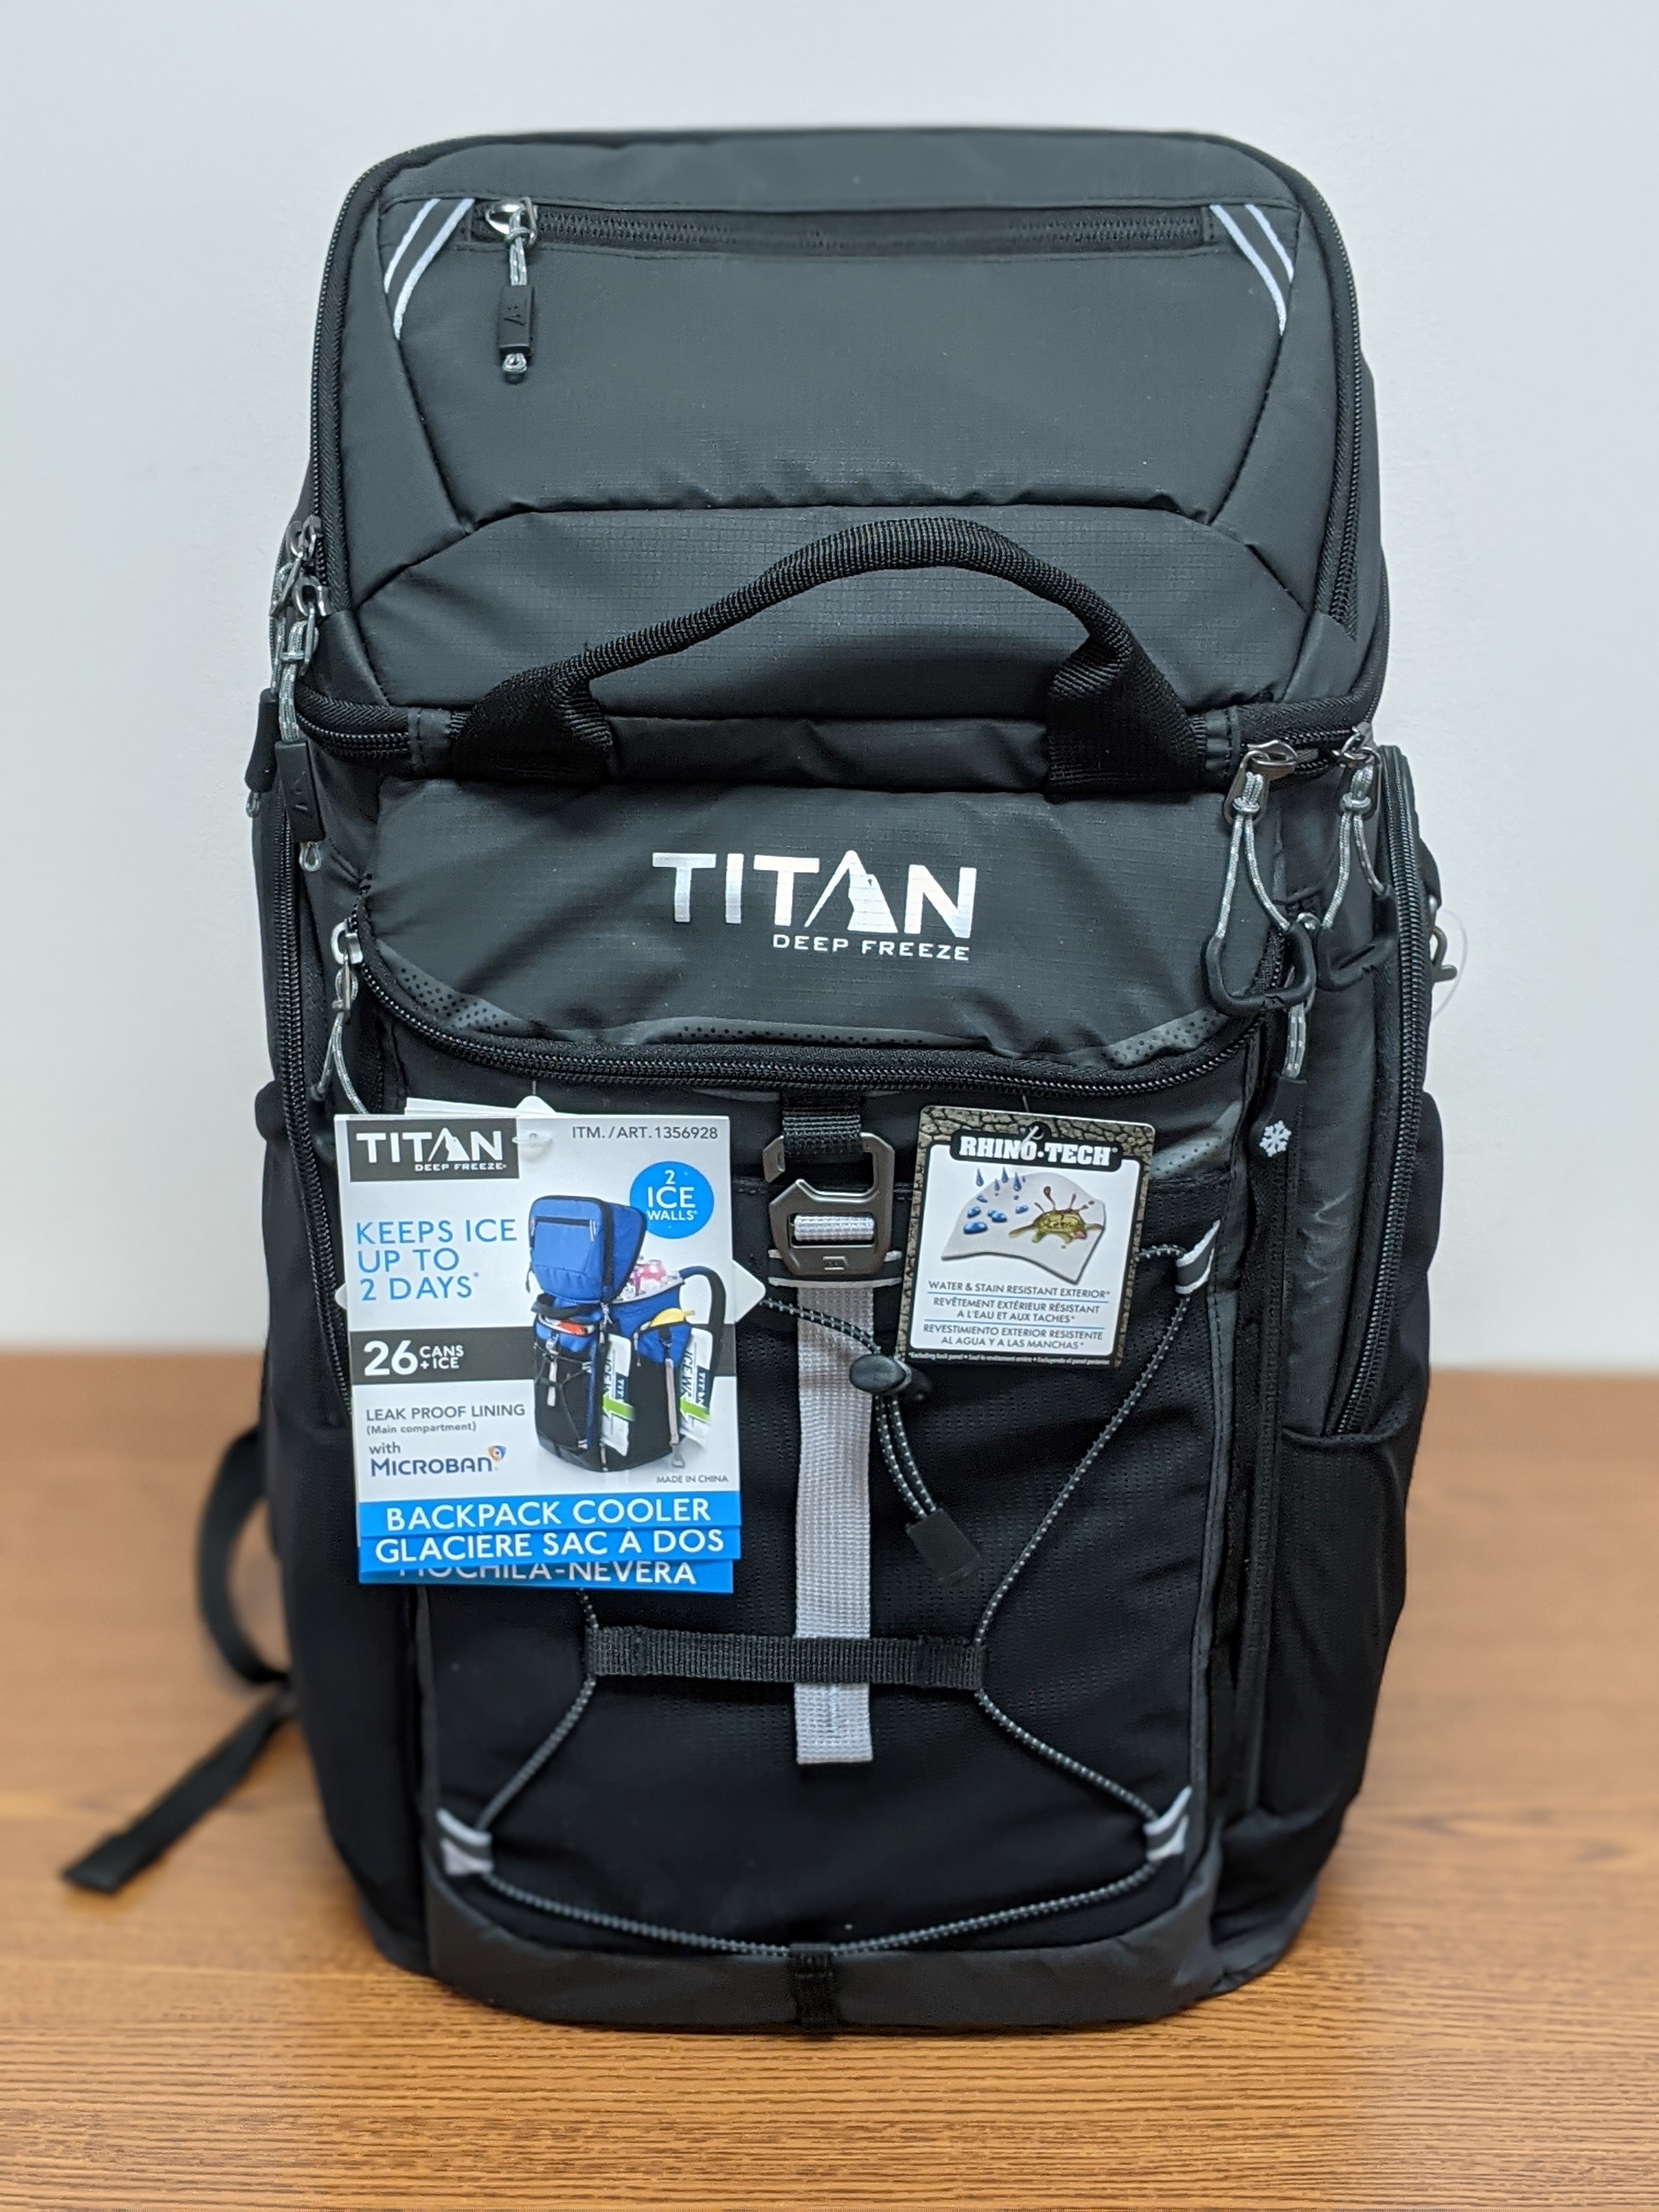 TITAN Deep Freeze Backpack Cooler, teamhope2021